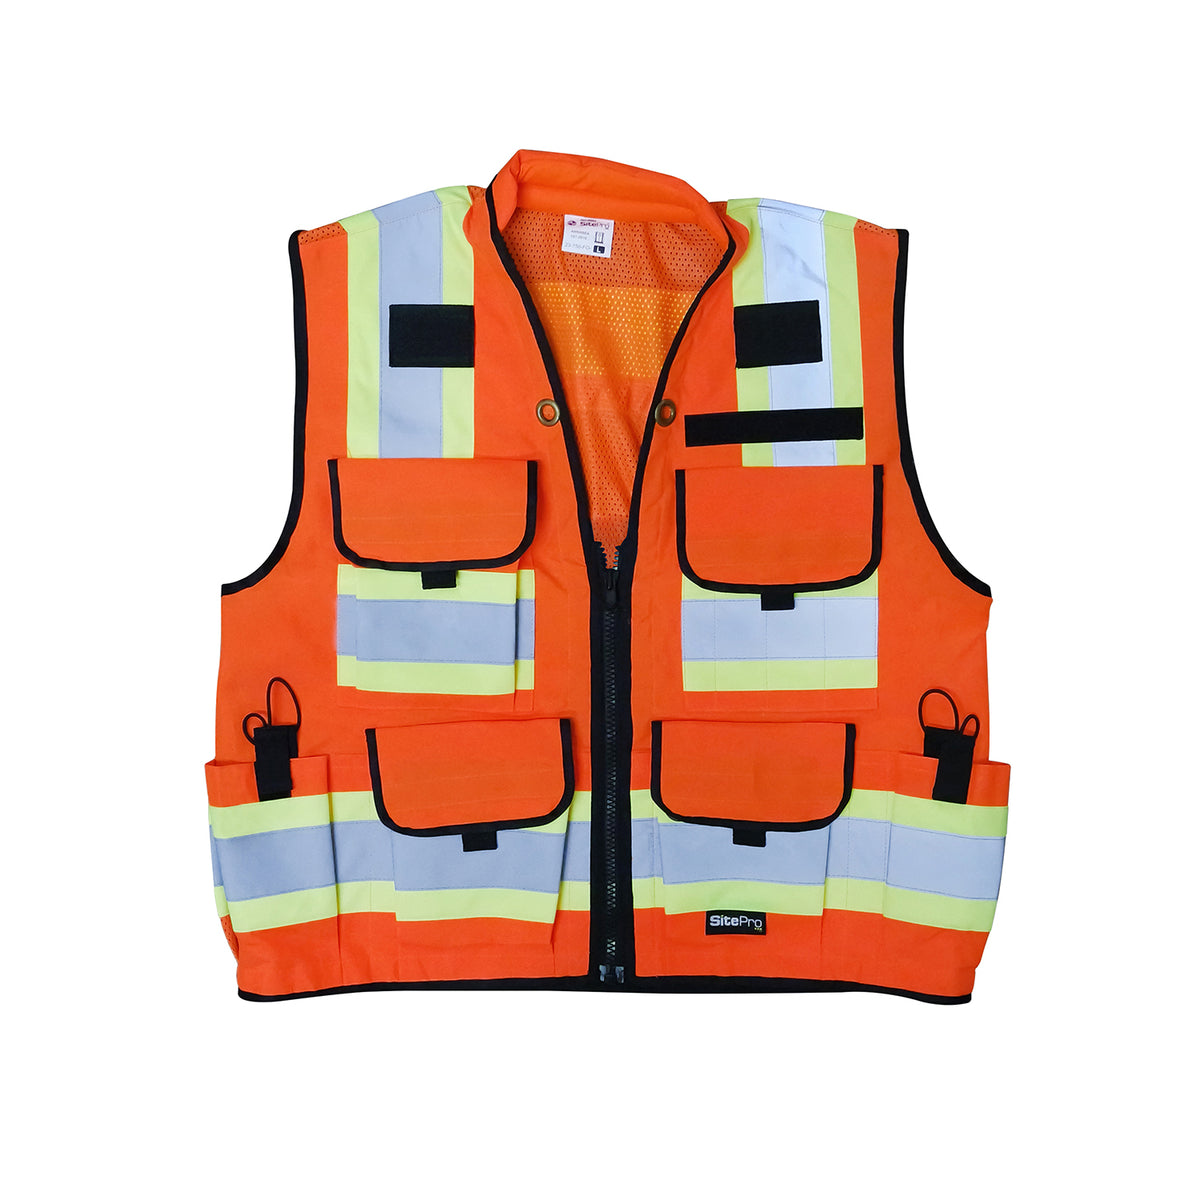 SitePro Premium Surveyor Safety Vest, Class 2 - Orange -Safety- eGPS Solutions Inc.